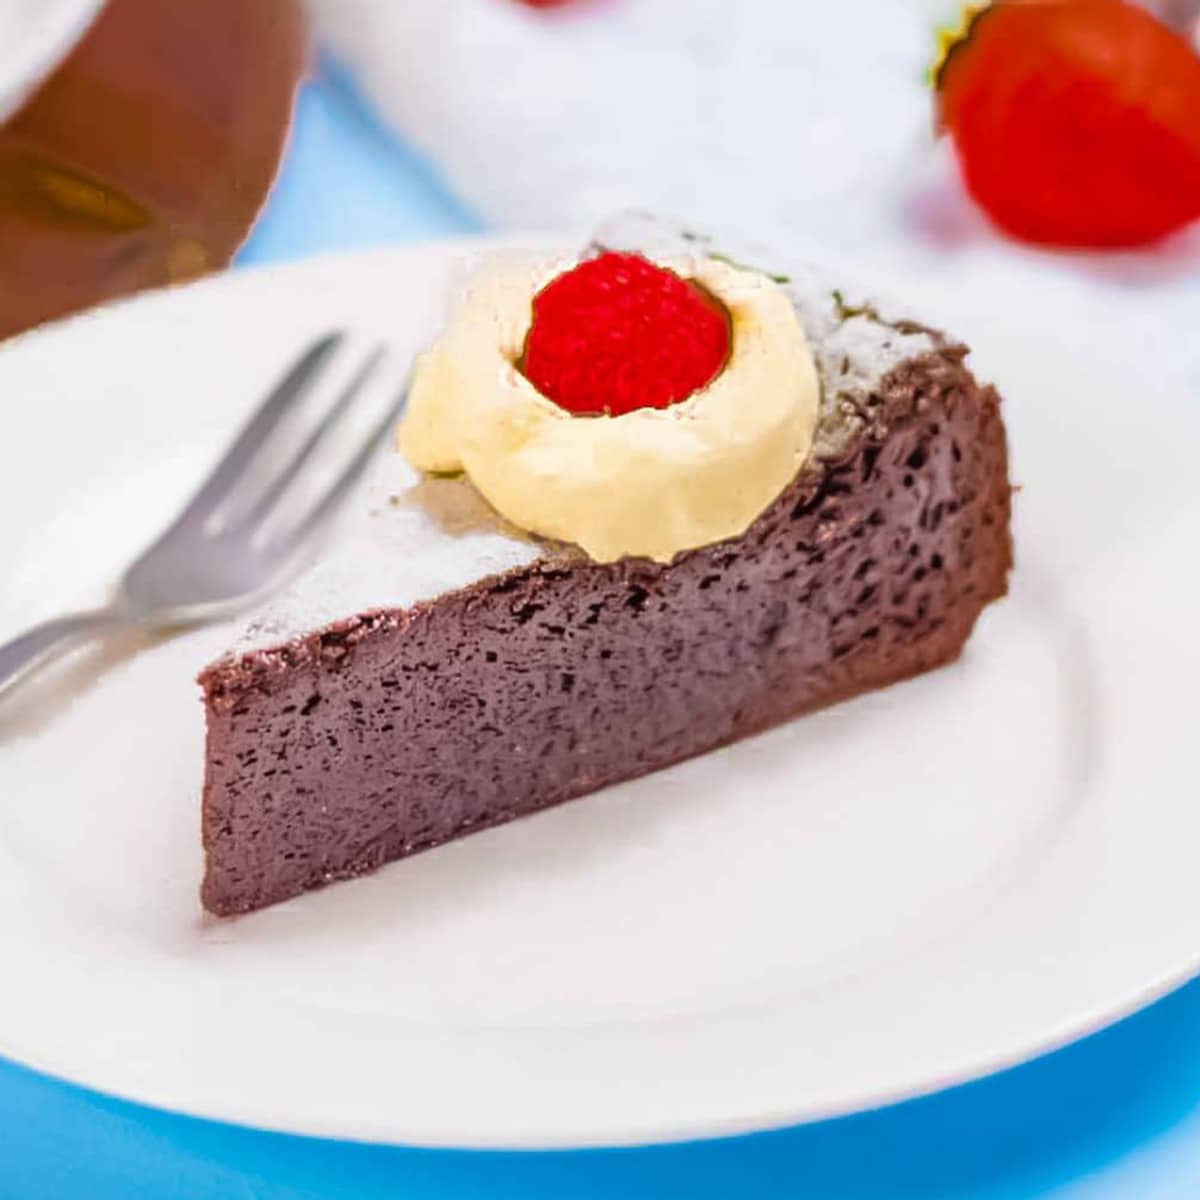 Ket flourless chocolate cake on a white plate.